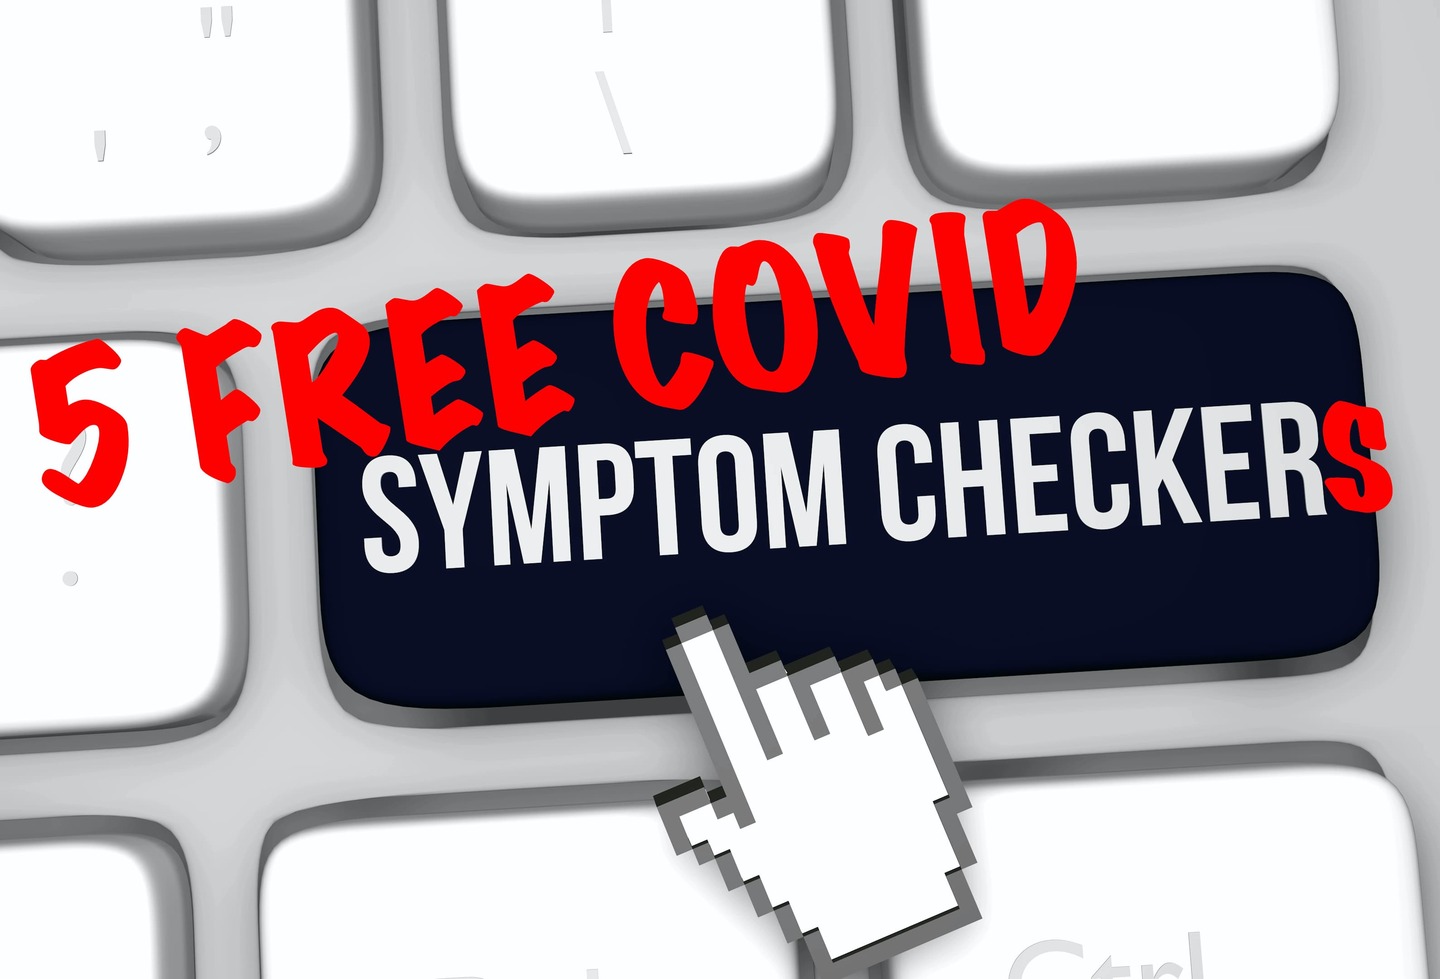 Covid Symptom Checkers